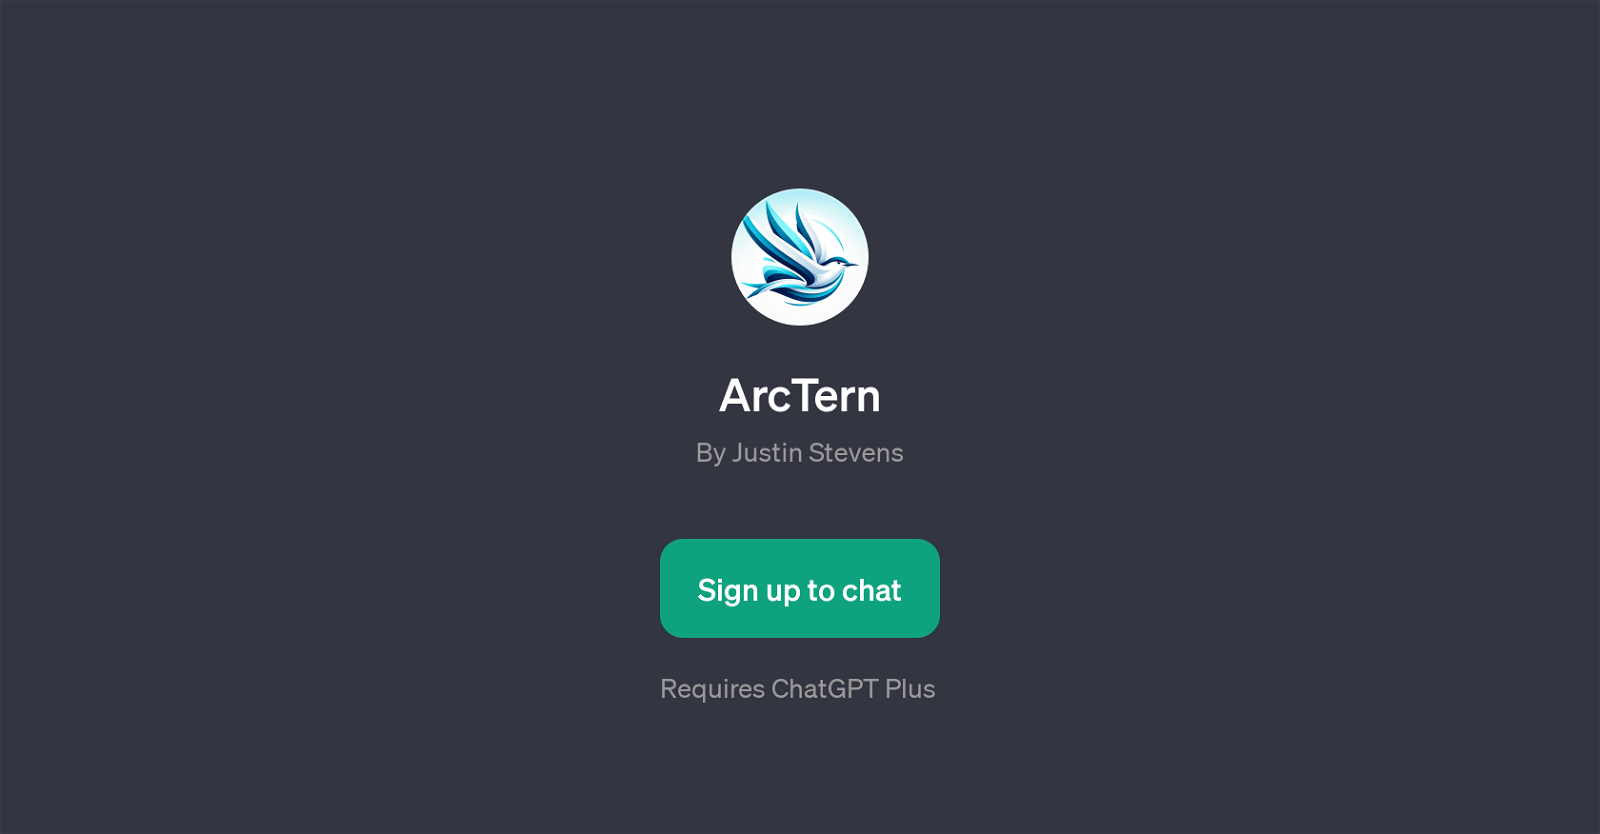 ArcTern website